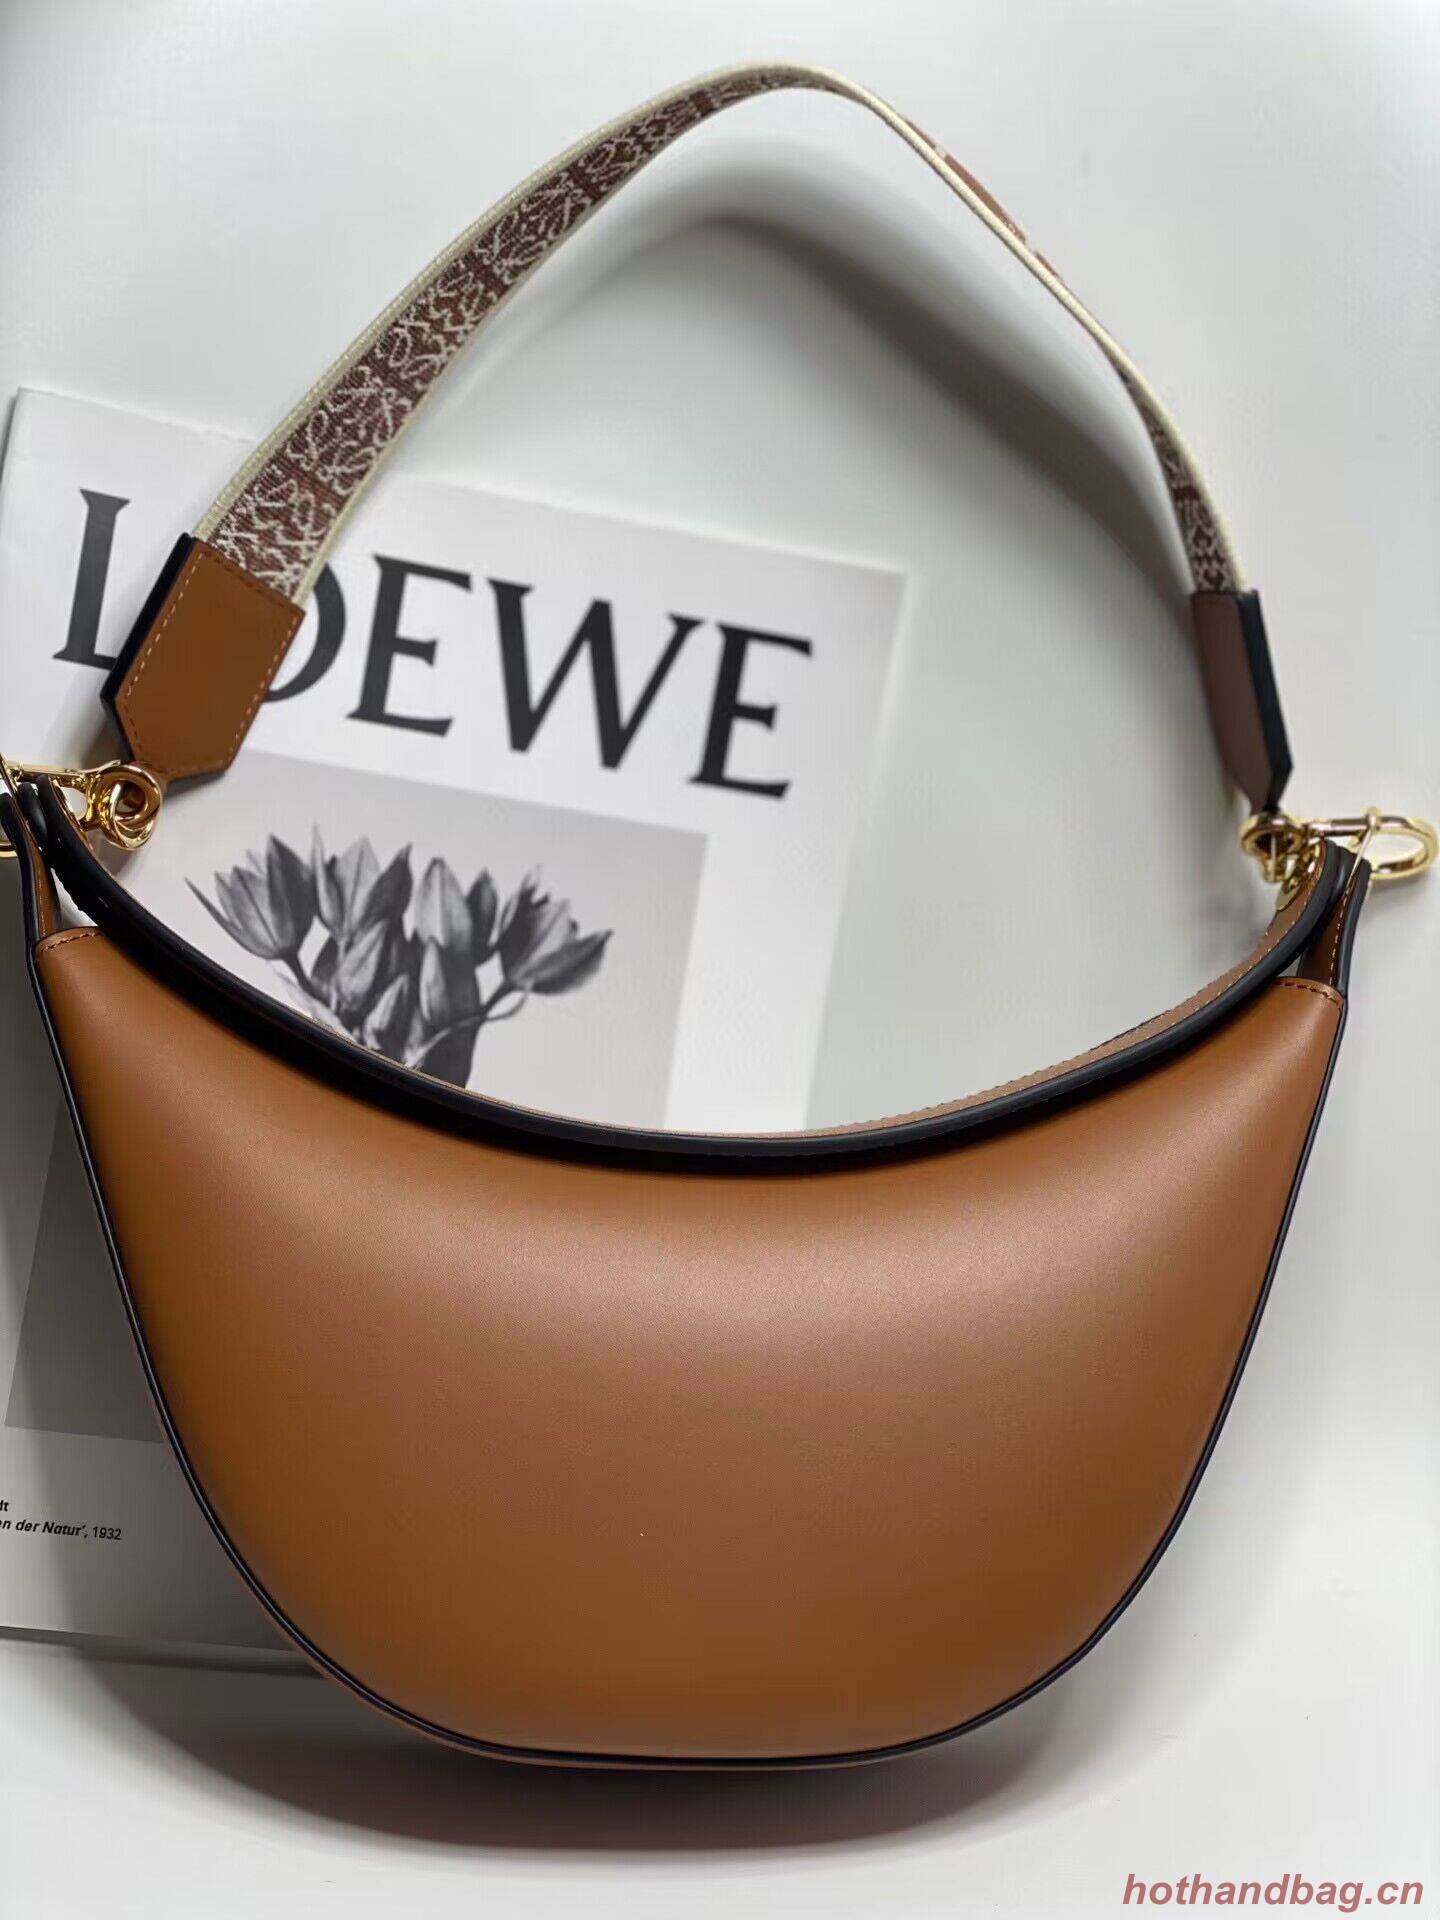 Loewe Original Leather Shoulder Handbag 3073 Brown